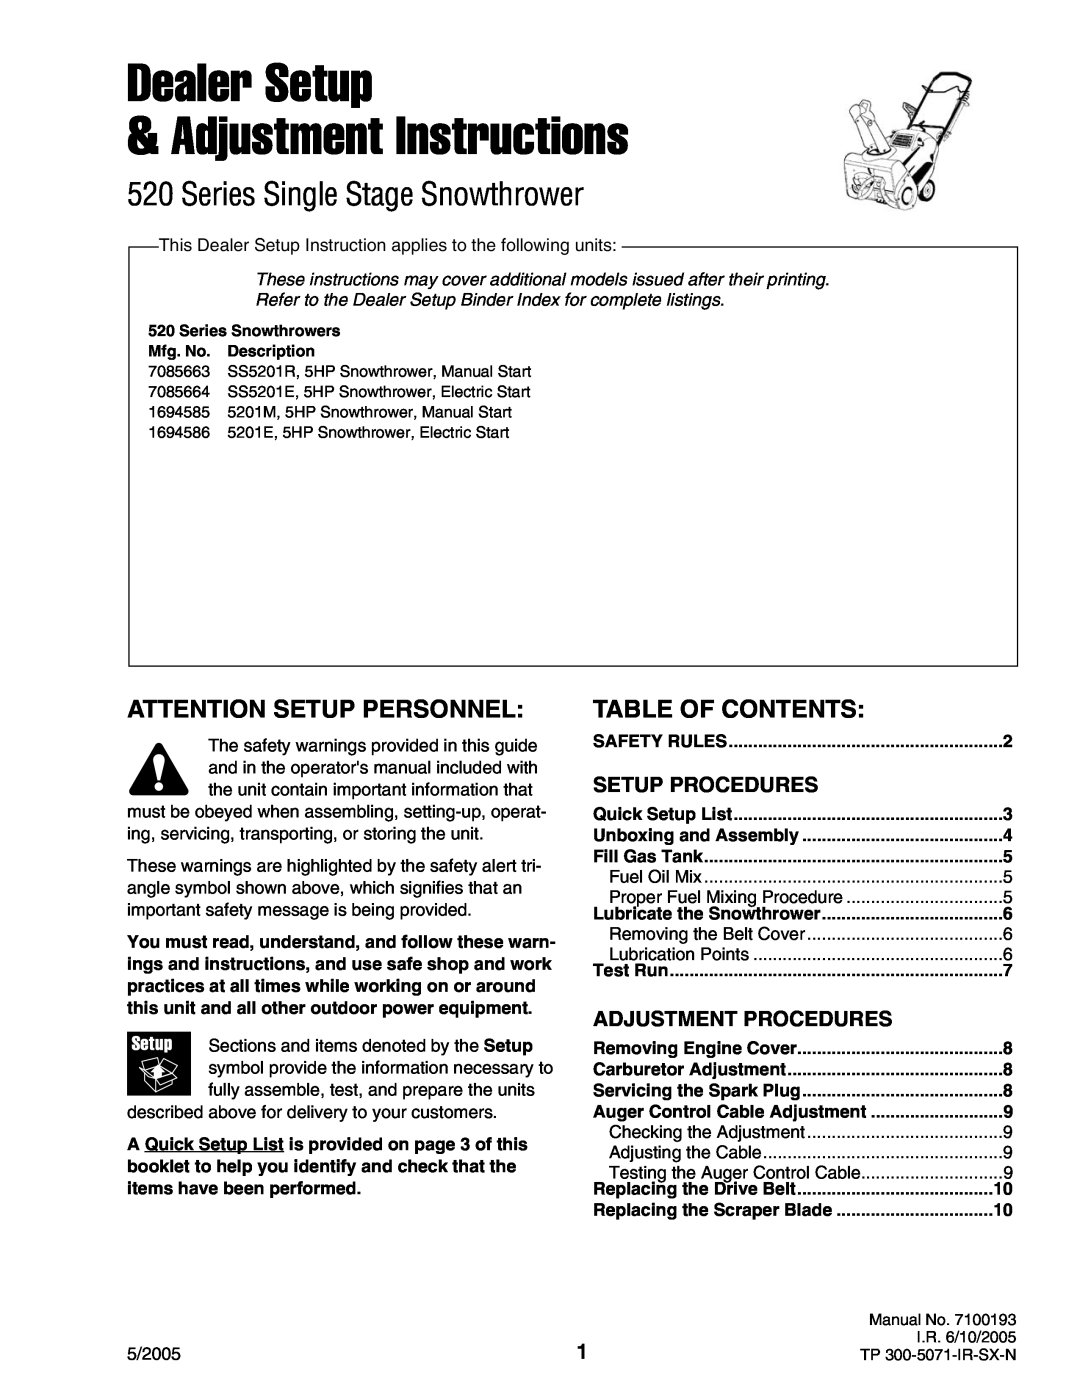 Snapper 5201E, 5201M manual Attention Setup Personnel, Table Of Contents, Setup Procedures, Adjustment Procedures 